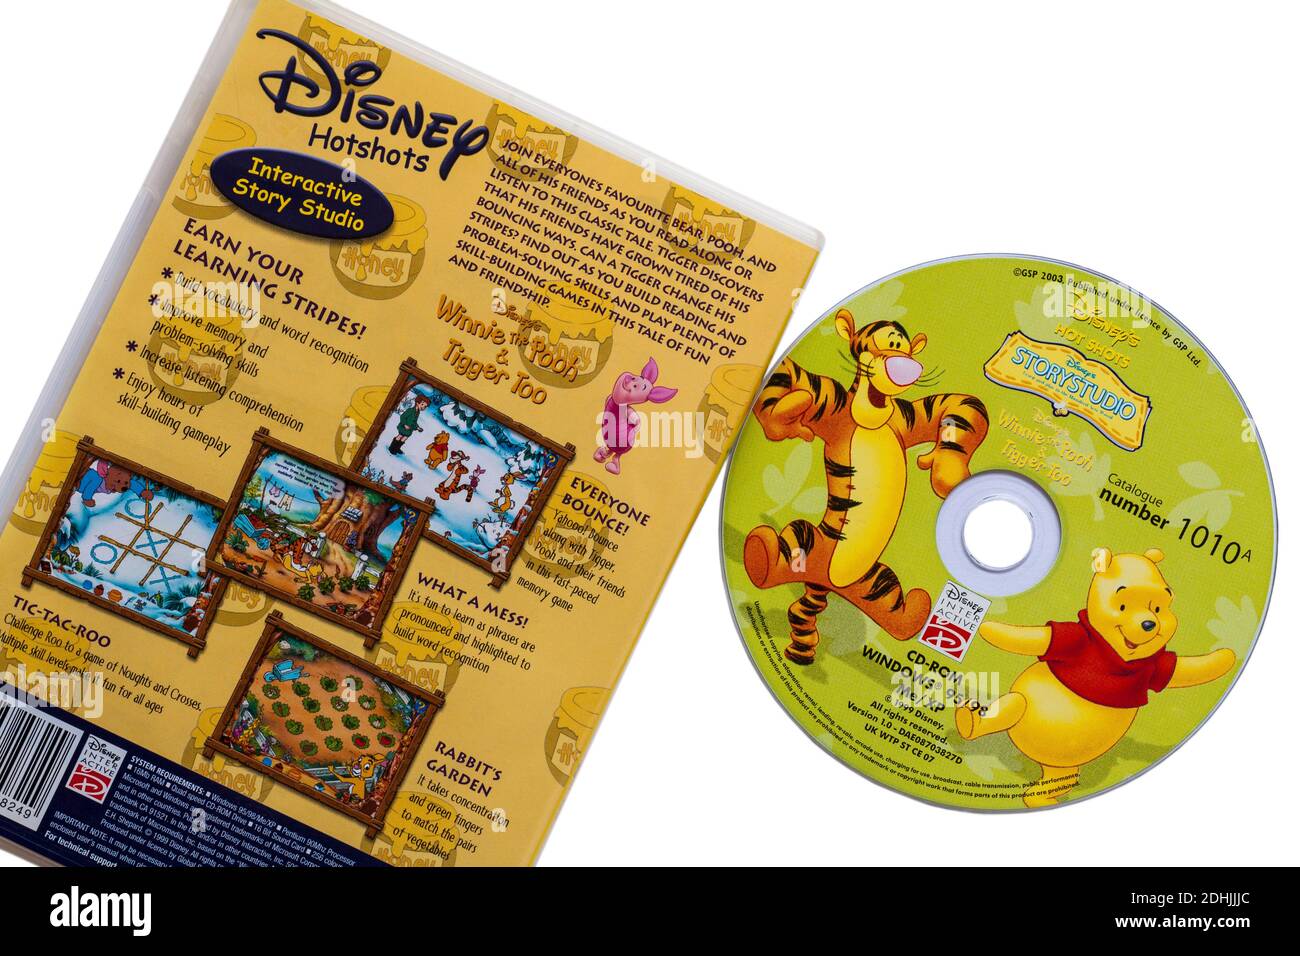 Disney Hotshots Disney's Winnie the Pooh & Tigger Too PC CD interactive story studio set on white background - back of case Stock Photo